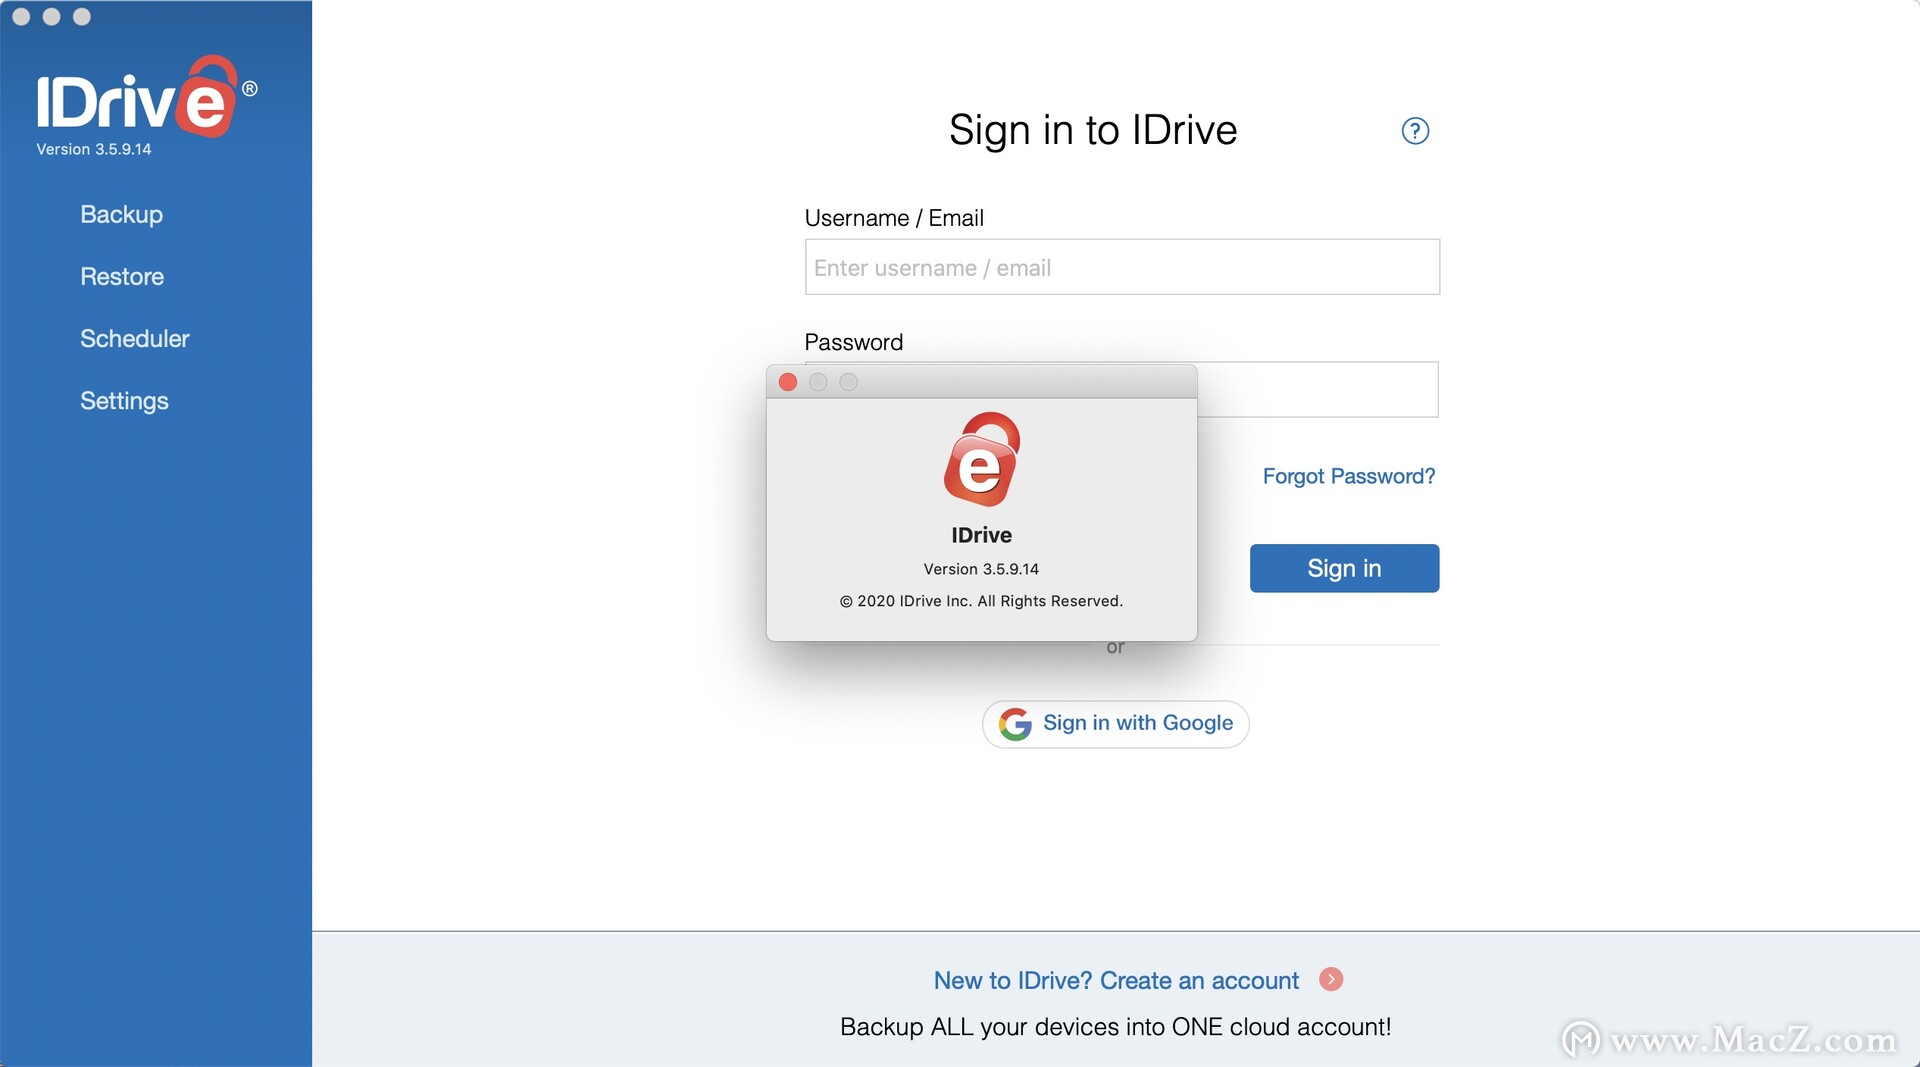 iDrive for mac(好用的自动备份软件)v3.5.9.14 免费版